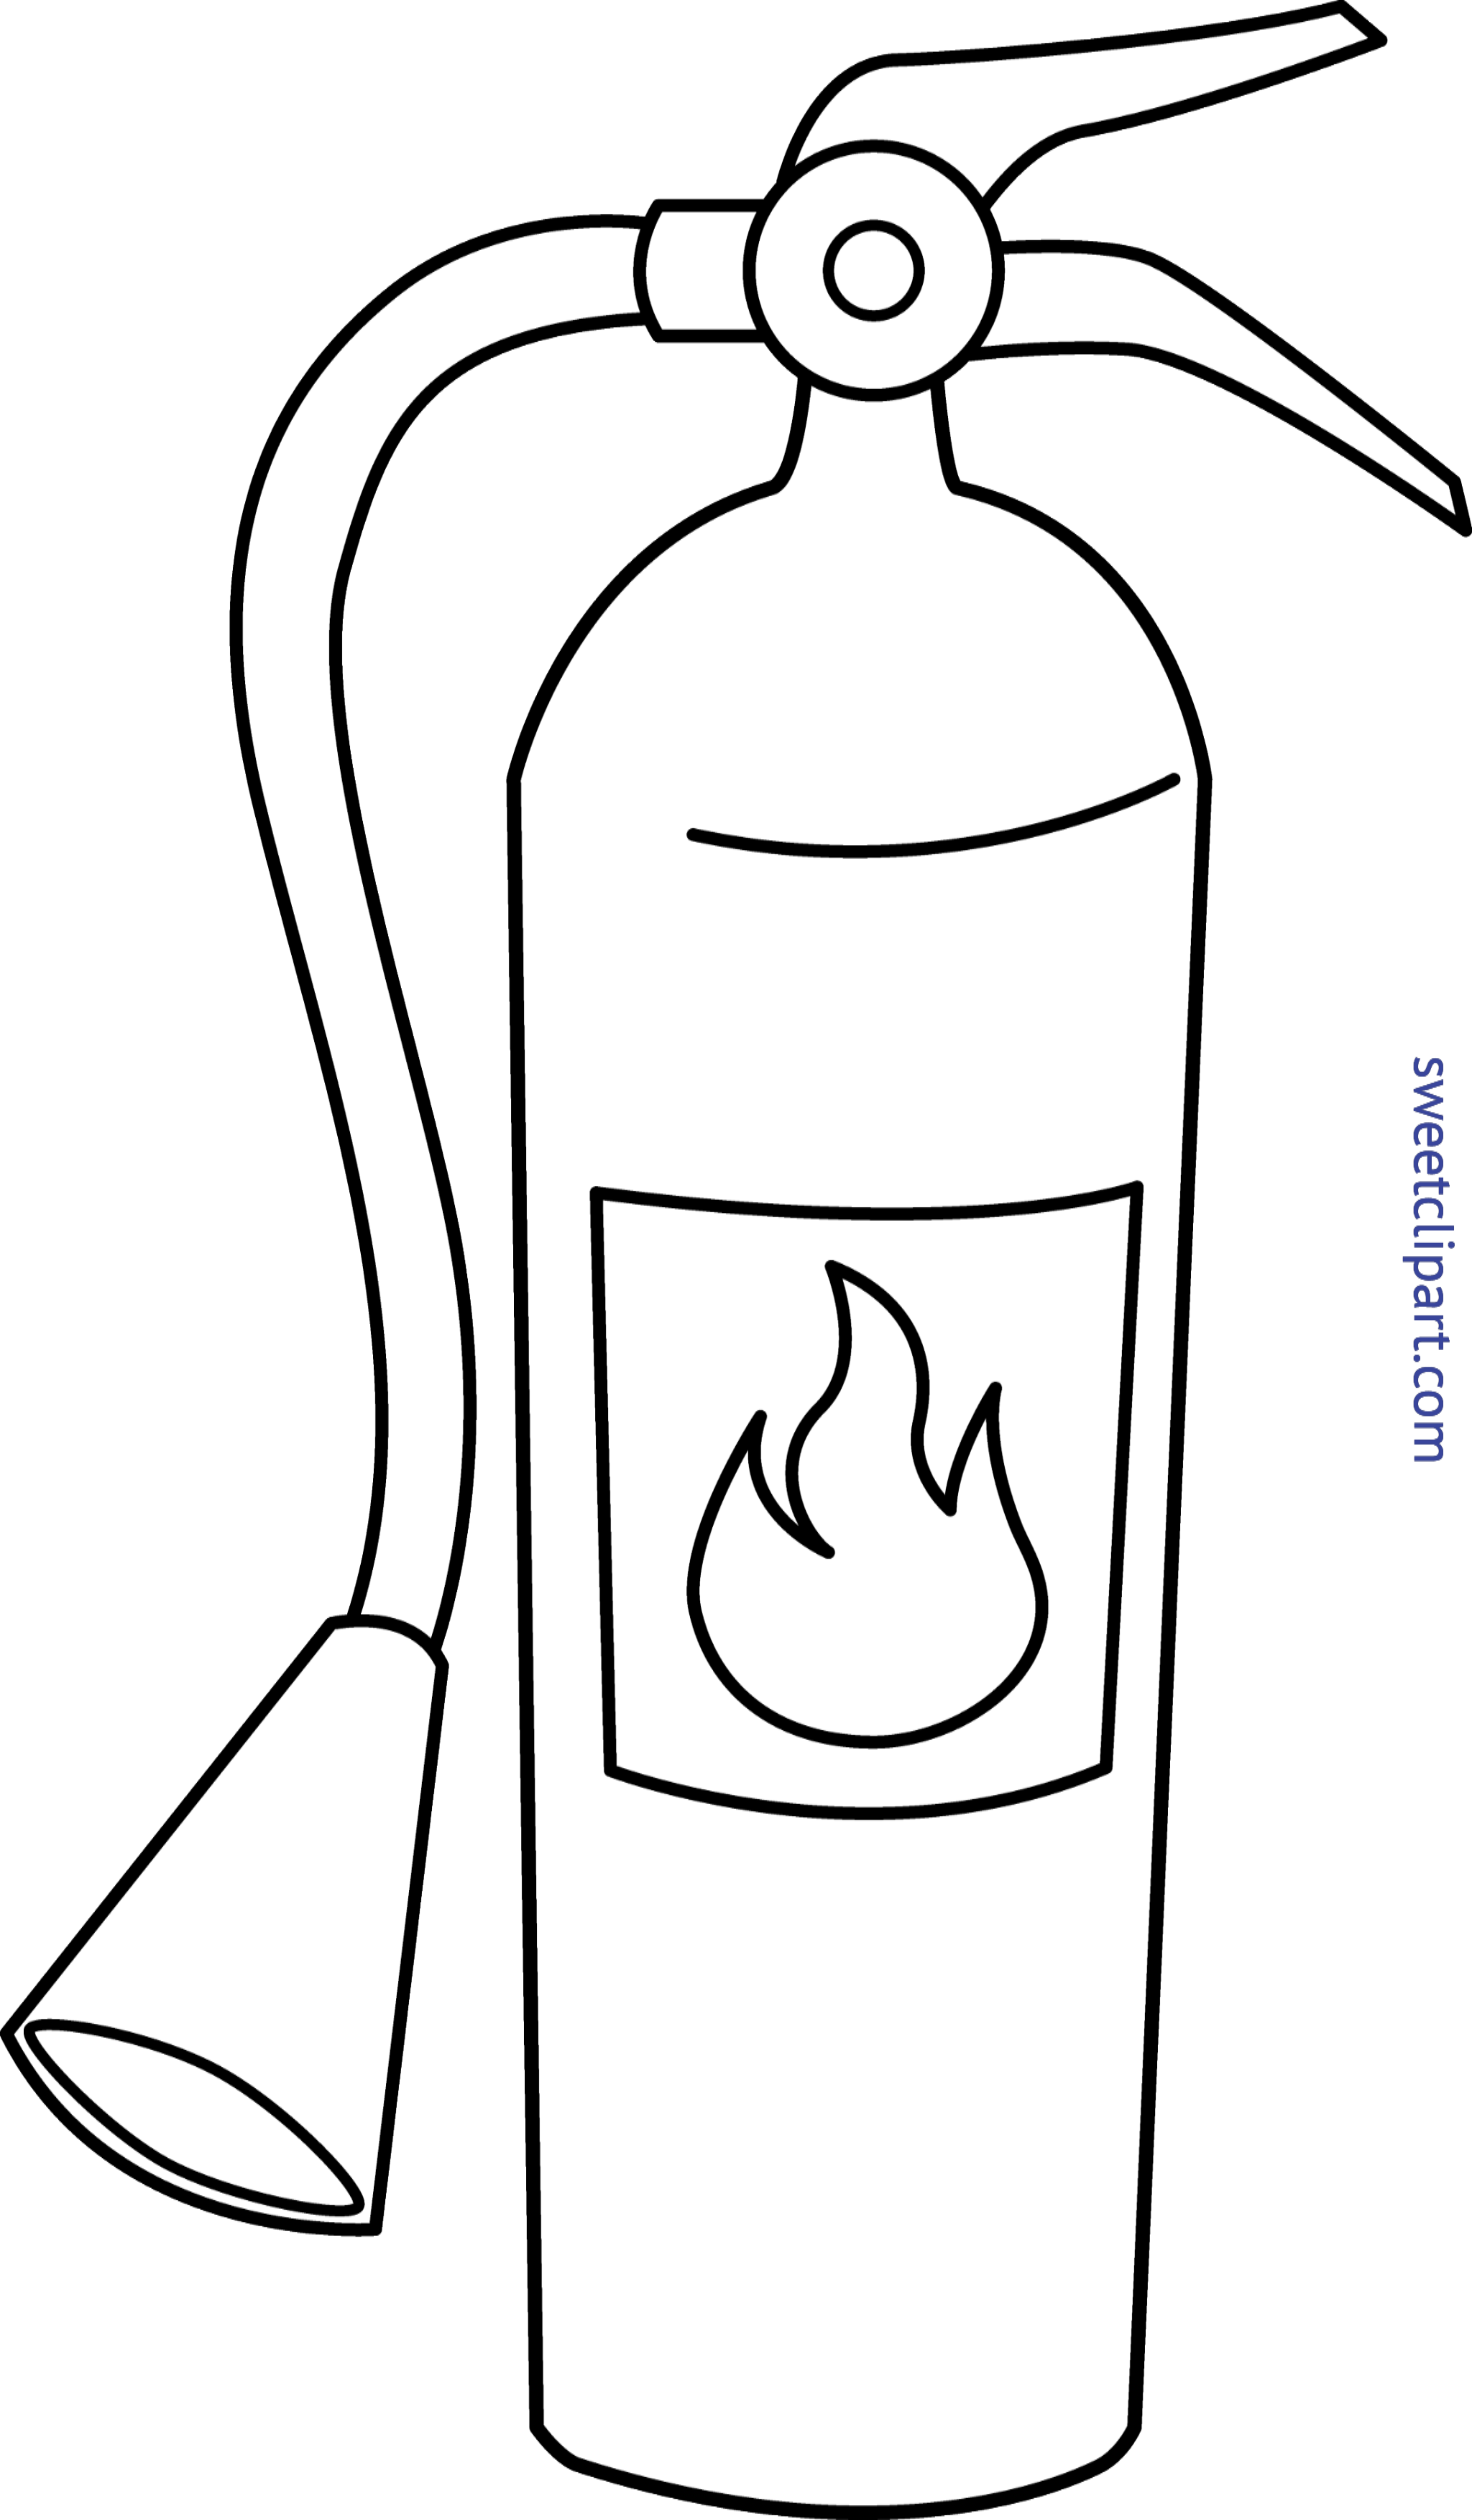 fire extinguisher clip art